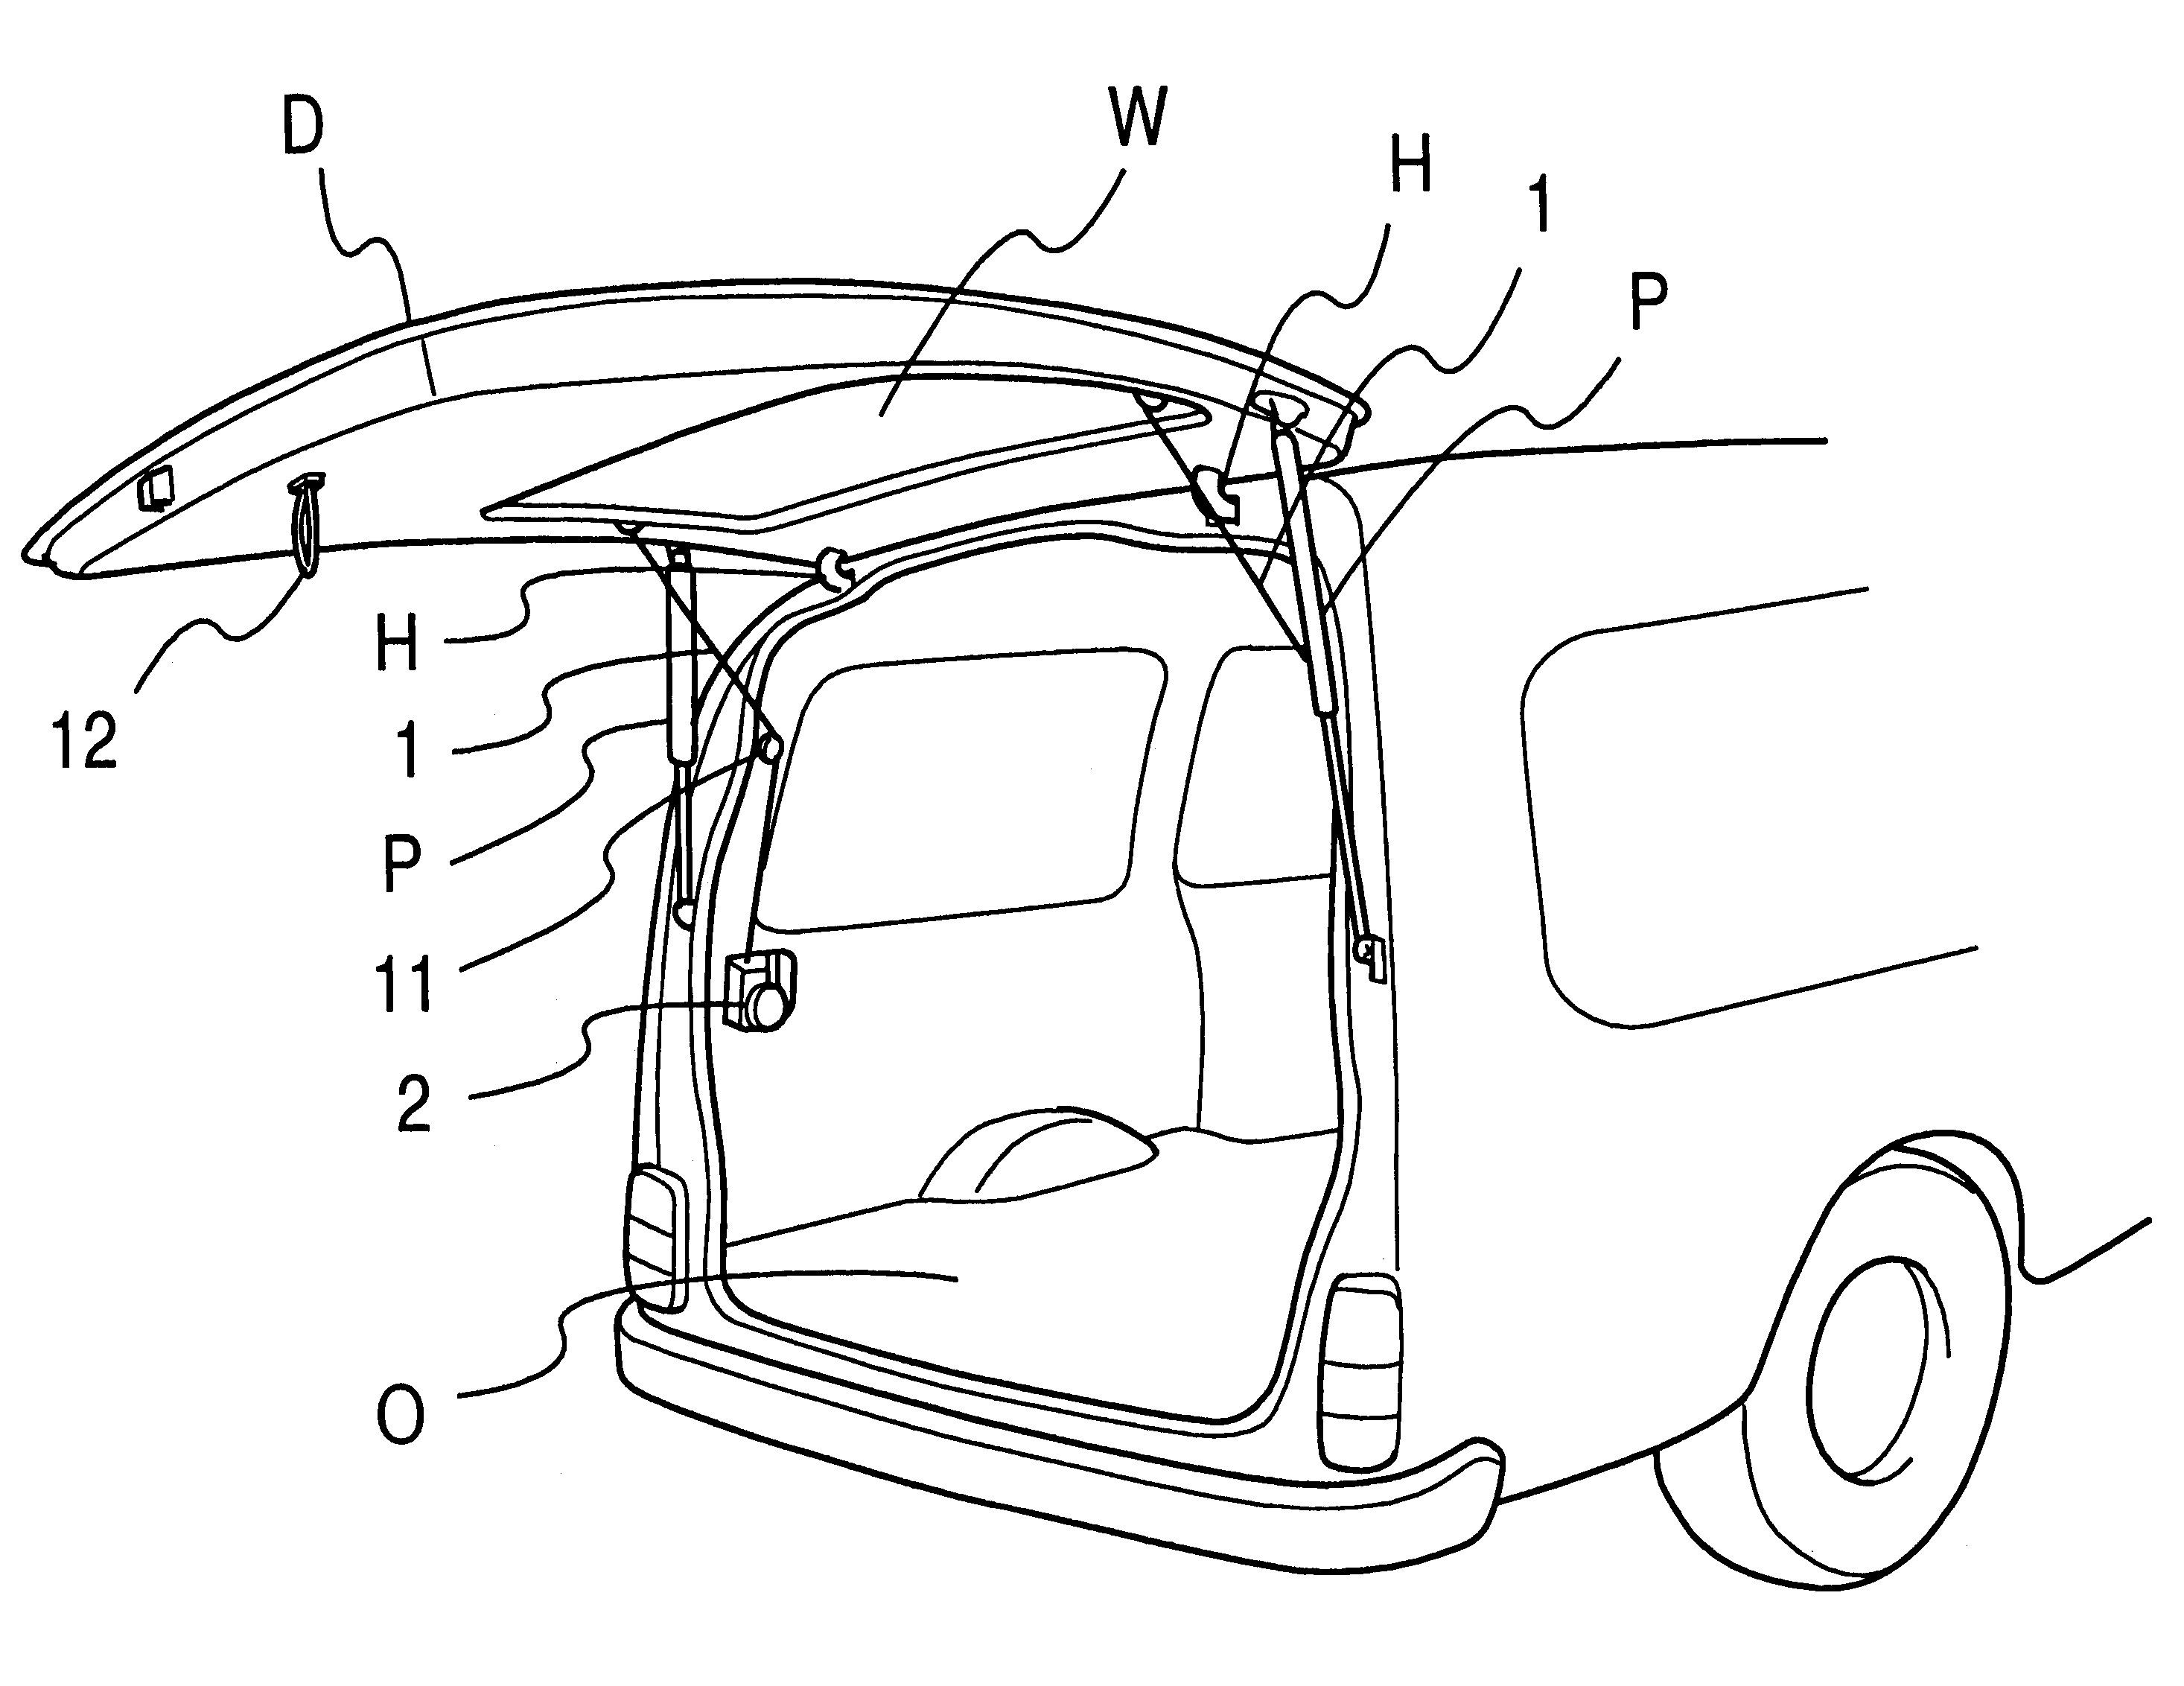 Automatic closer of pop-up door of vehicle